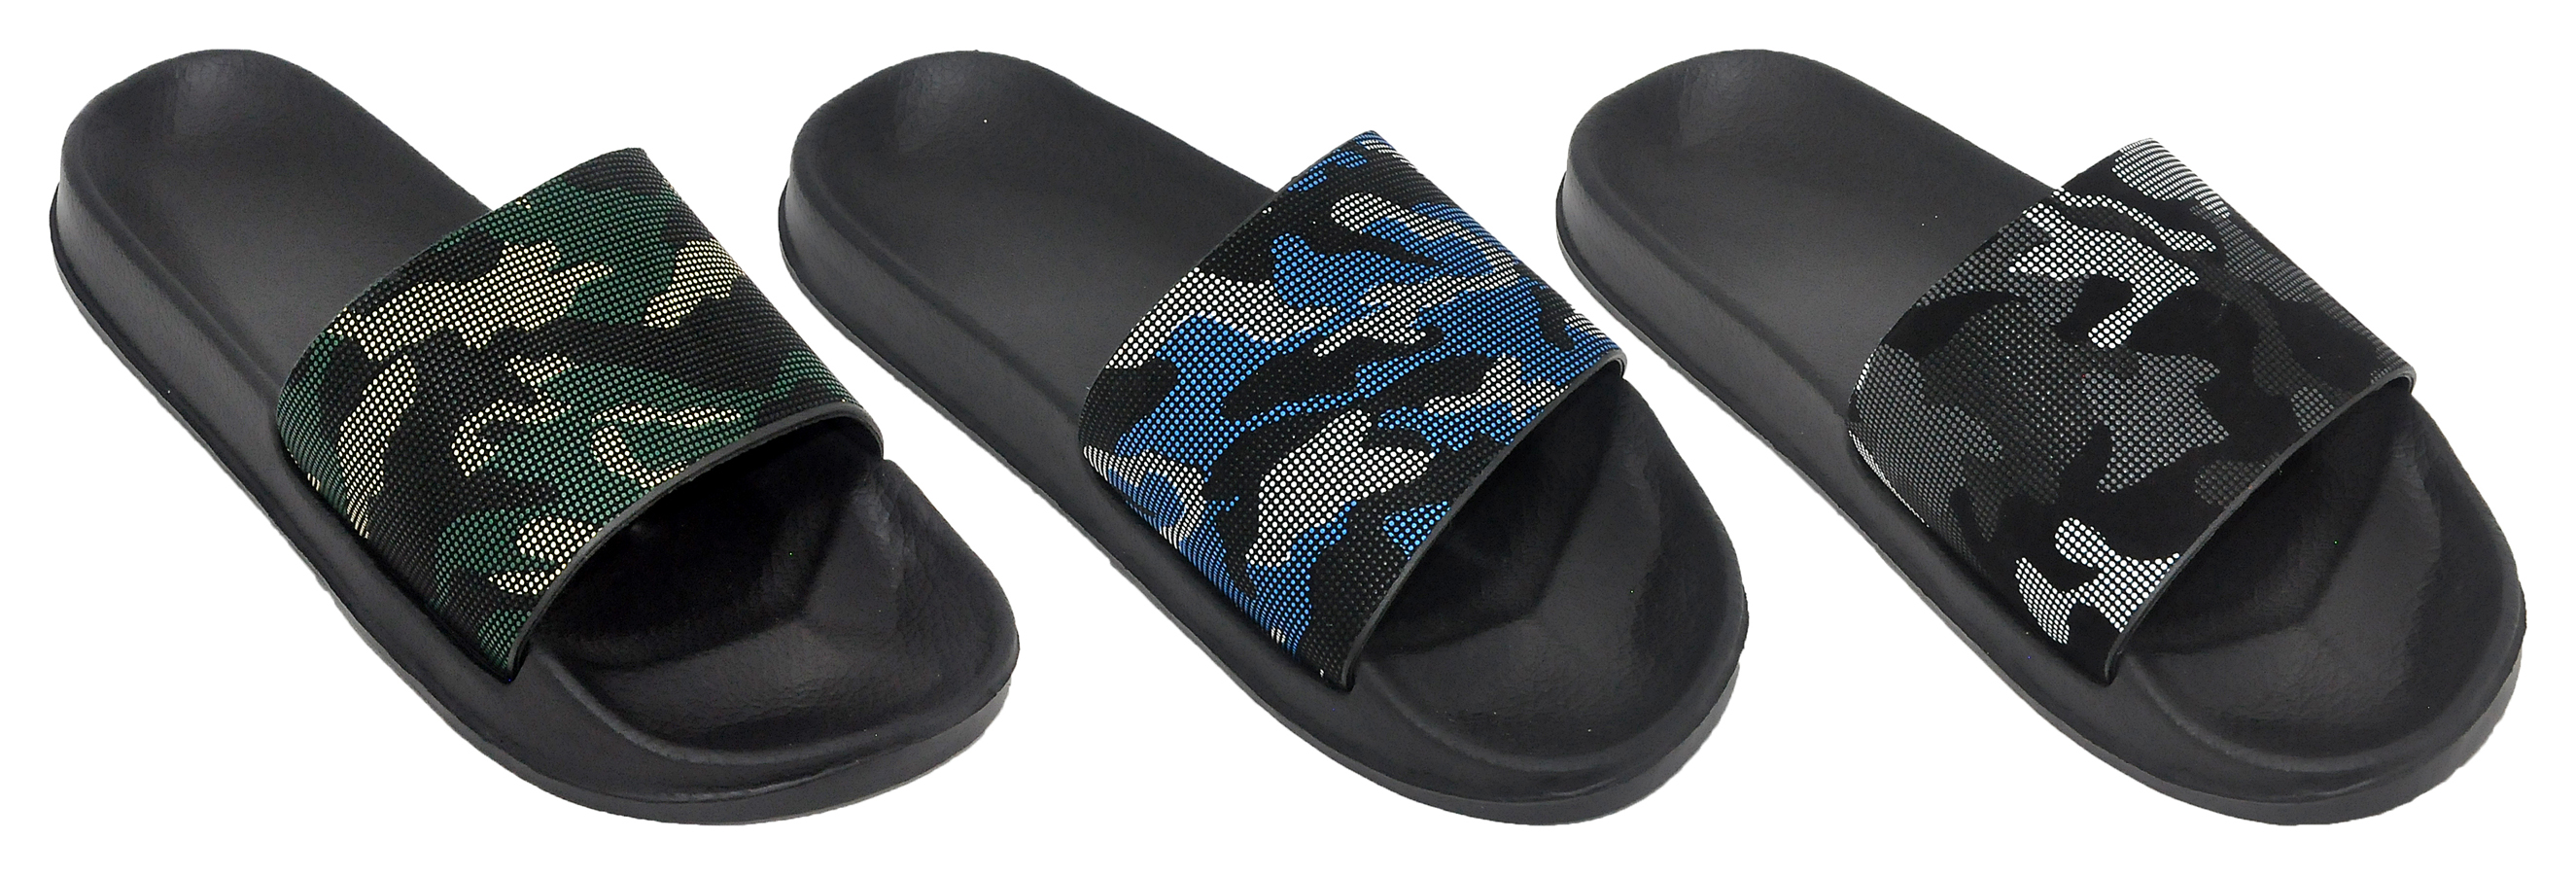 Men's Slide Sandals - Black w/ URBAN Camo Prints - Sizes 7-13